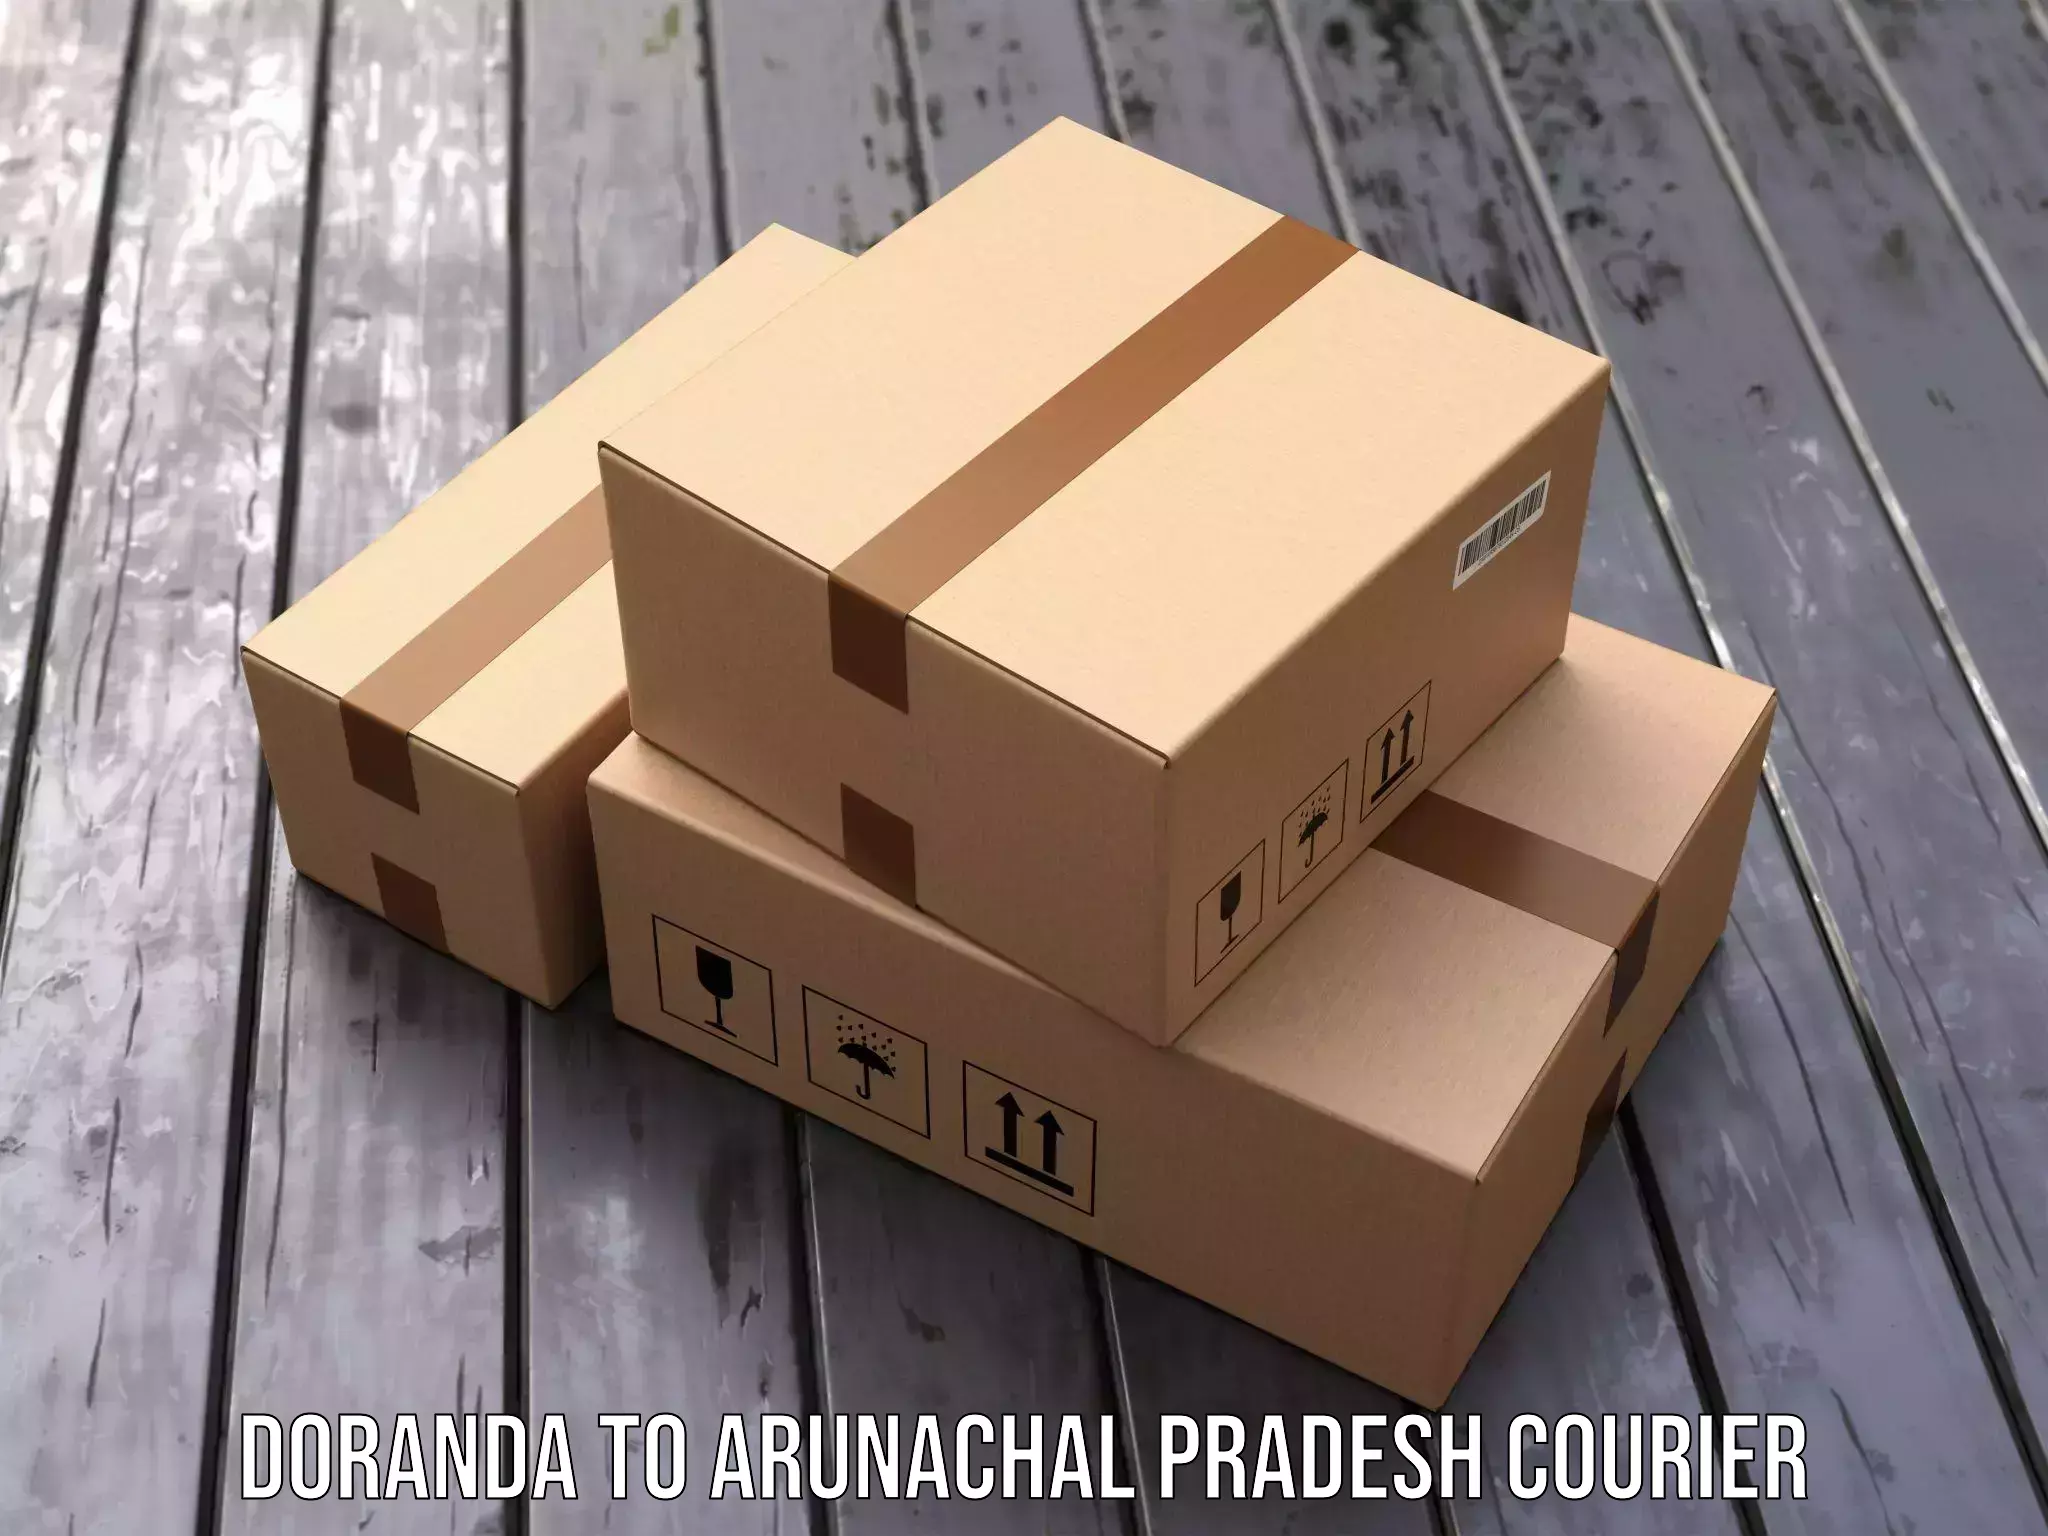 Courier service comparison Doranda to Arunachal Pradesh